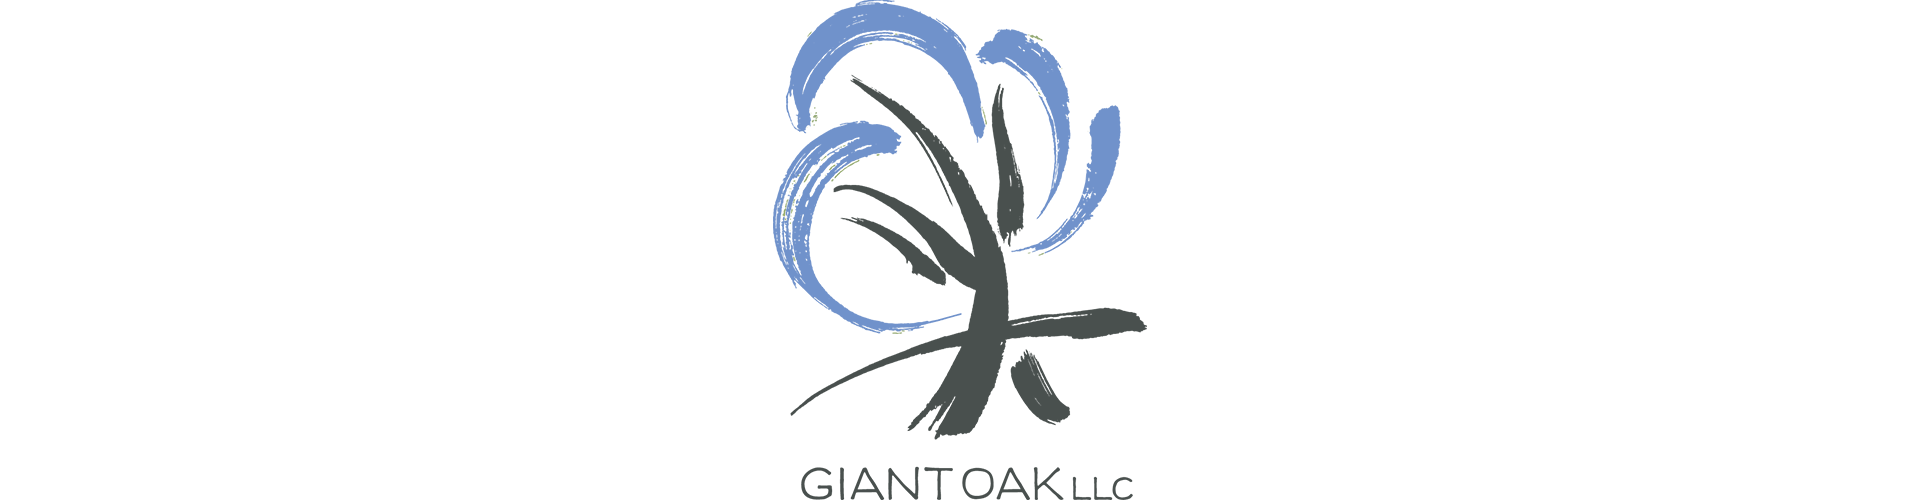 Giant-Oak-Logo-article-1